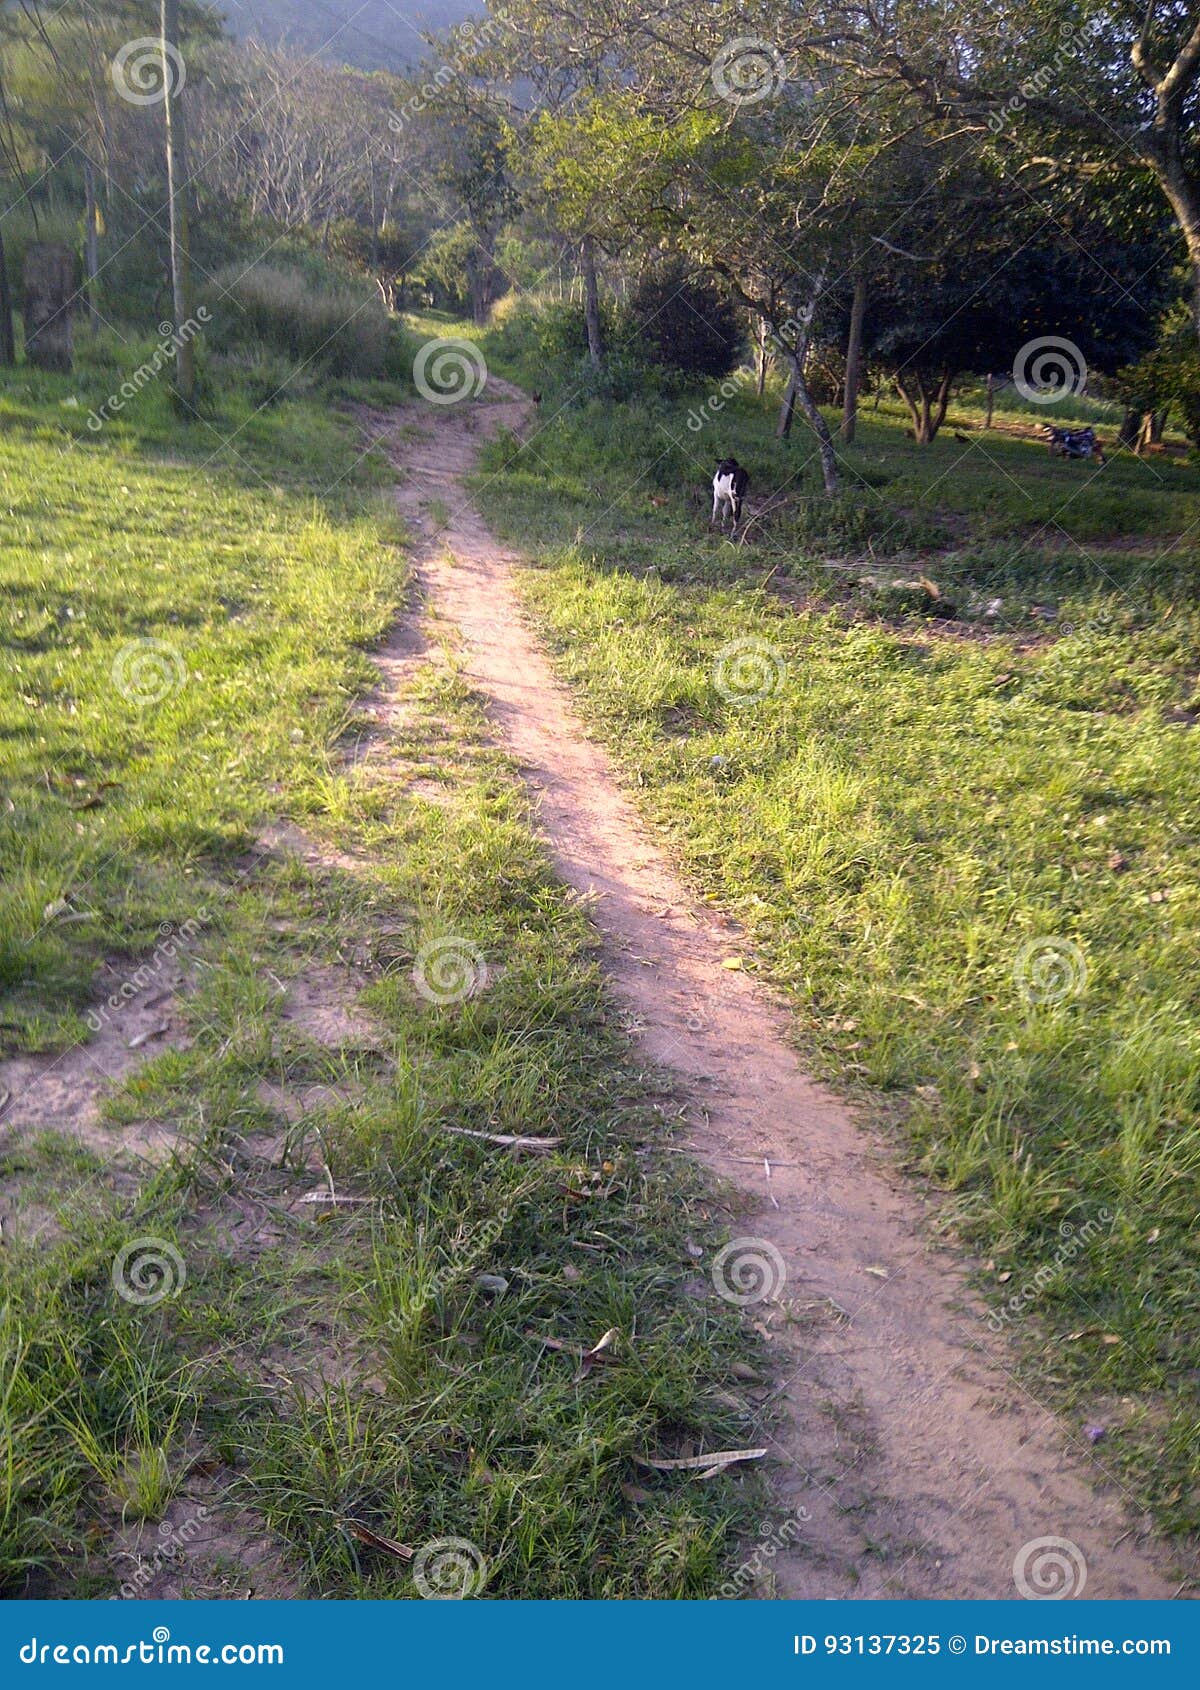 countryside walking path